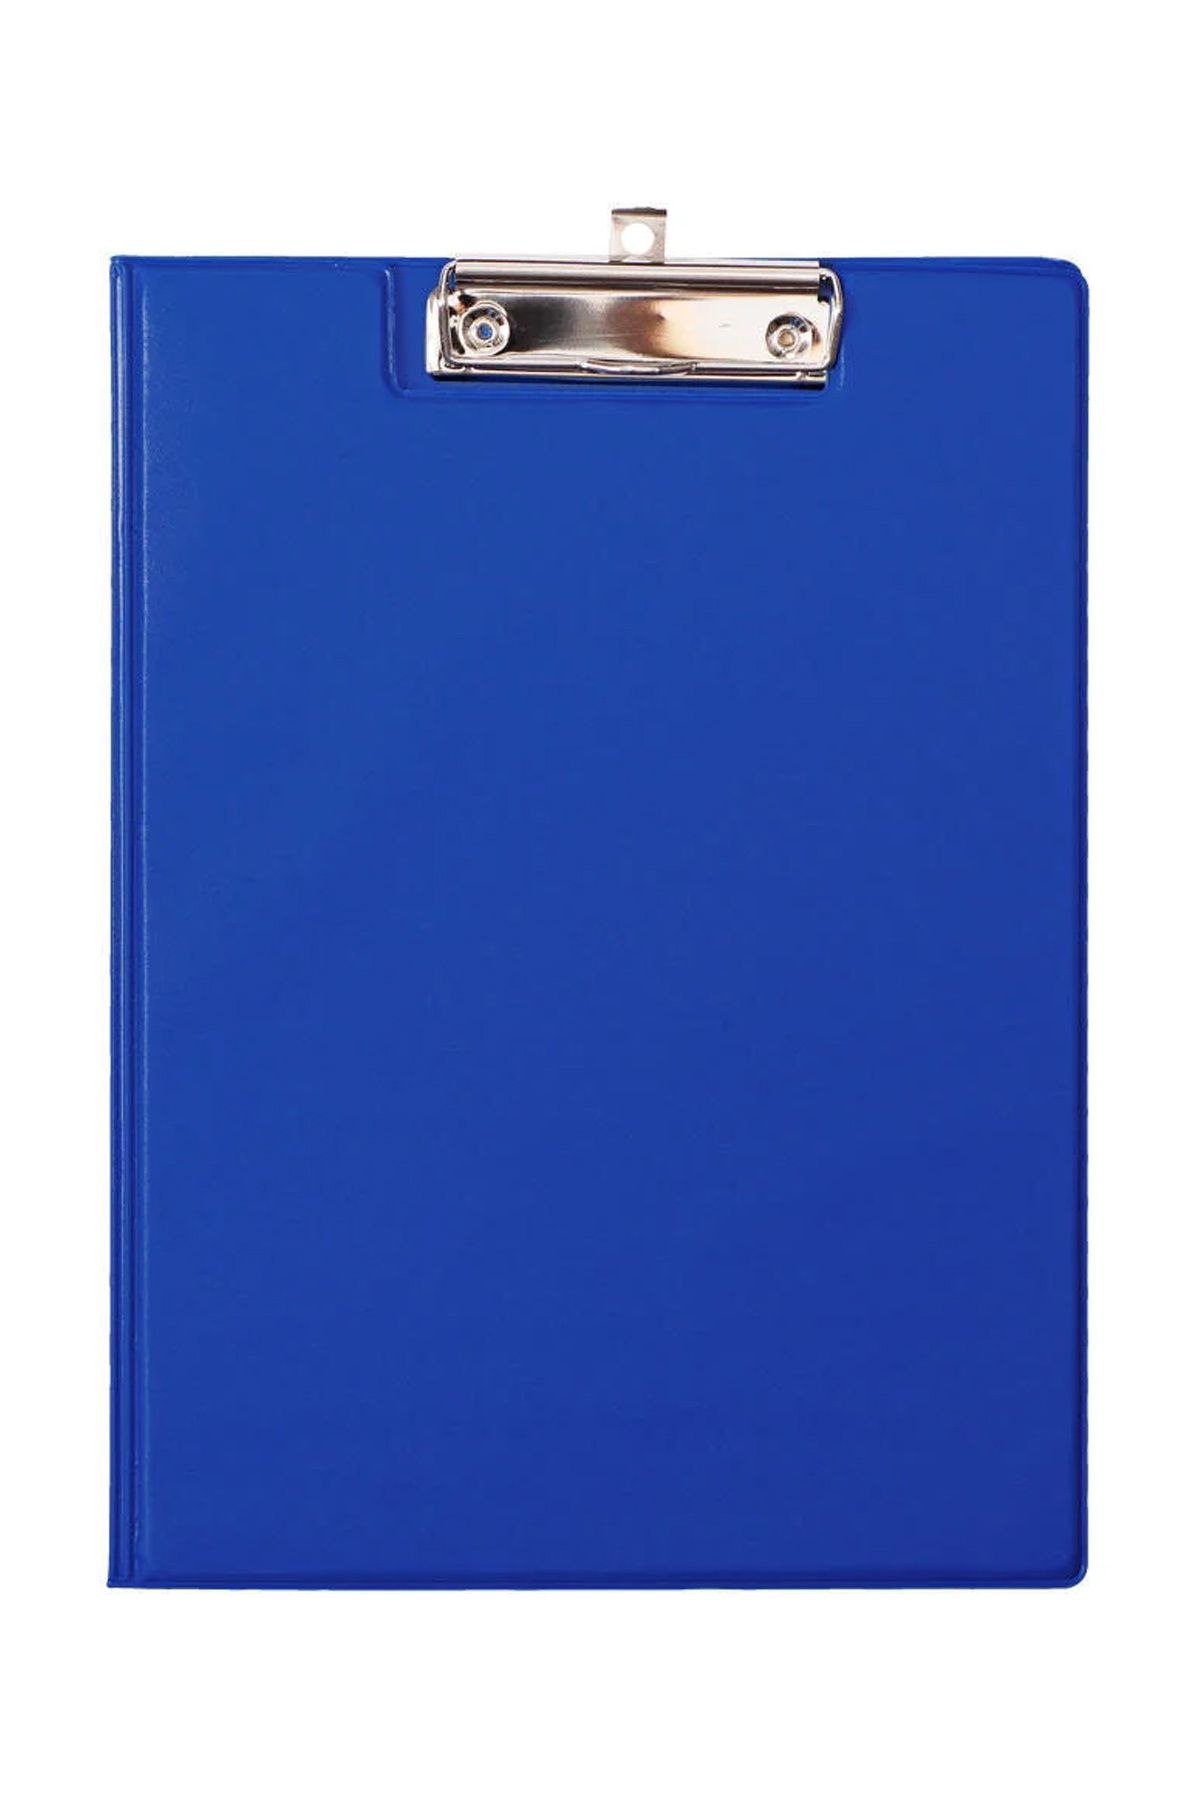 OMNİ PAZARLAMA Renkli Sekreterlik Dosya Kapaklı Mavi A4